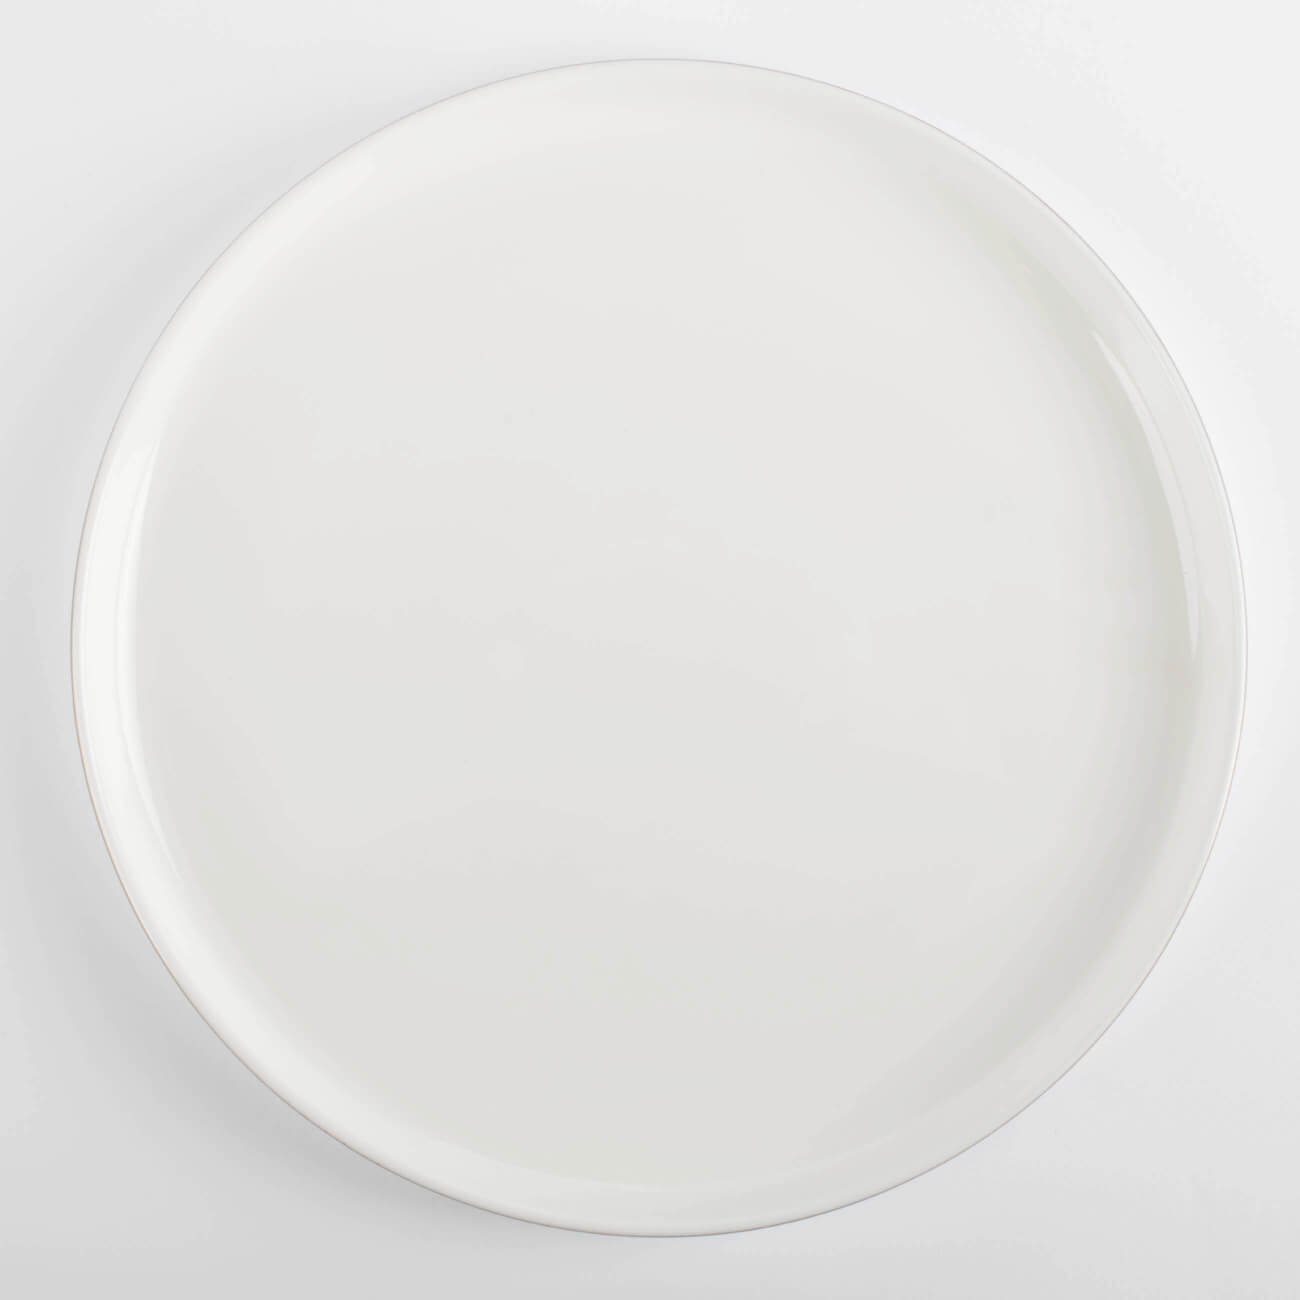 Тарелка обеденная, 26 см, фарфор F, белая, Ideal gold тарелка обеденная noritake трефолио платиновый кант 28 см